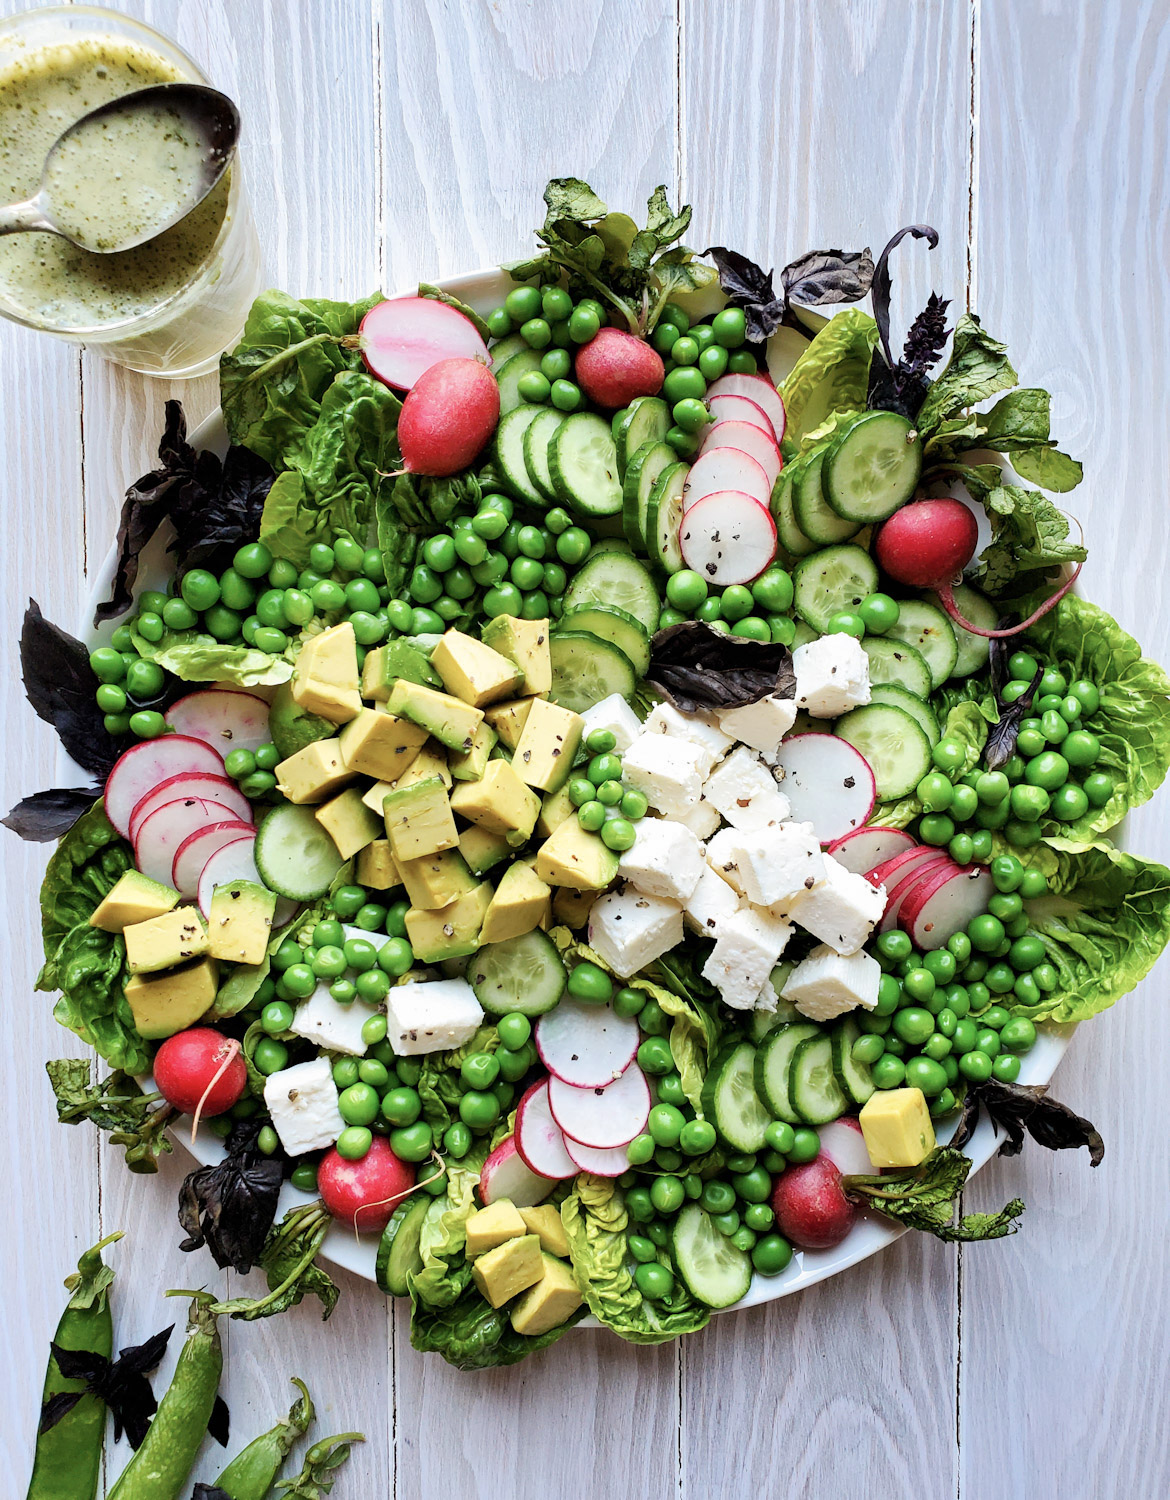 https://thelemonapron.com/wp-content/uploads/2021/04/spring-pea-salad-5.jpg